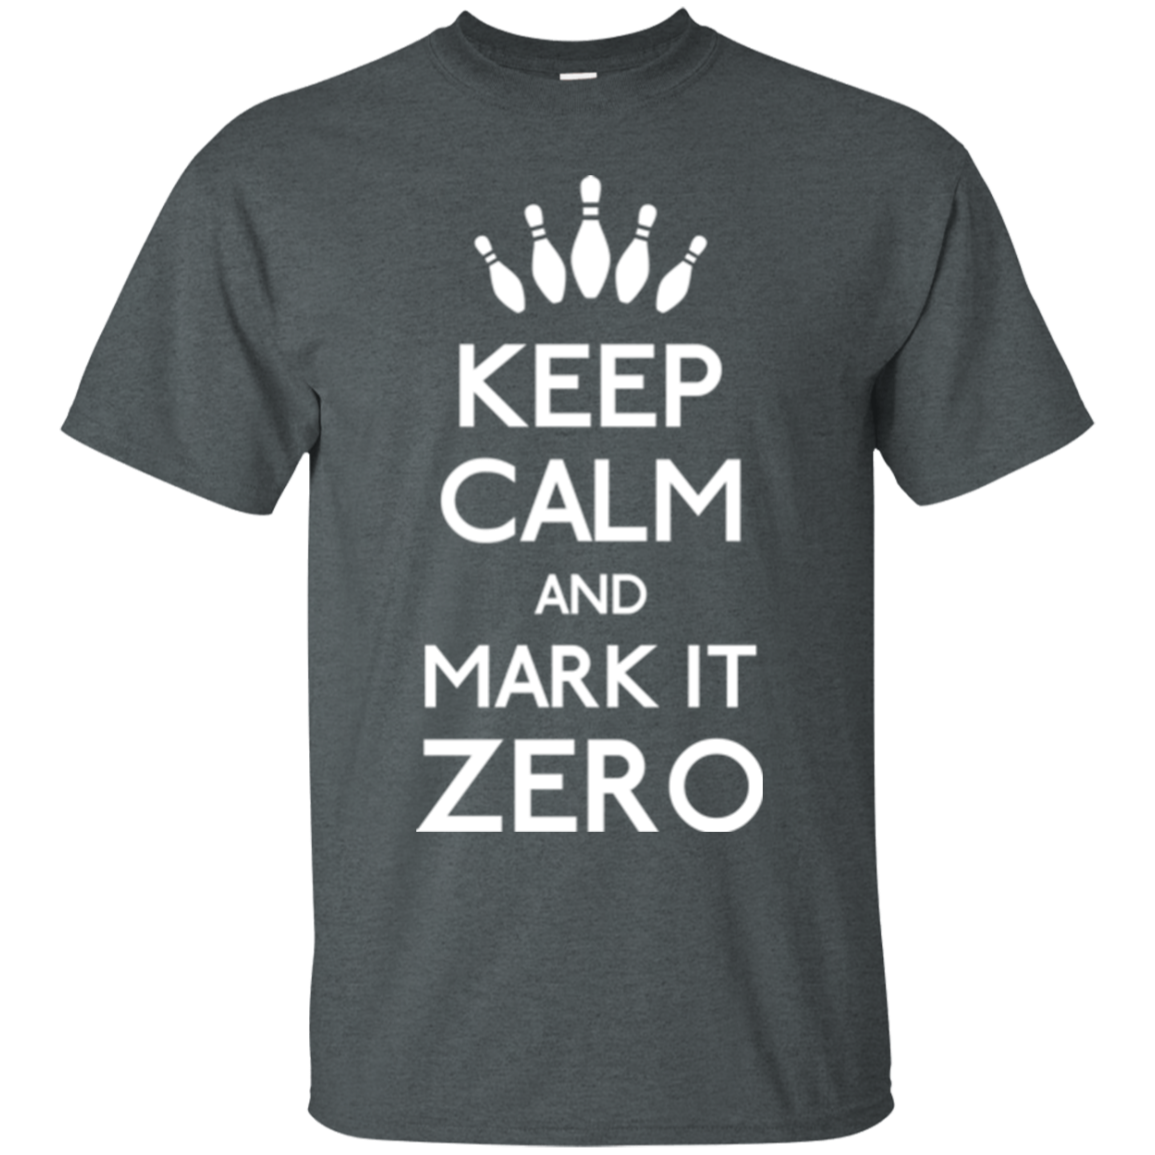 Mark it Zero T-Shirt